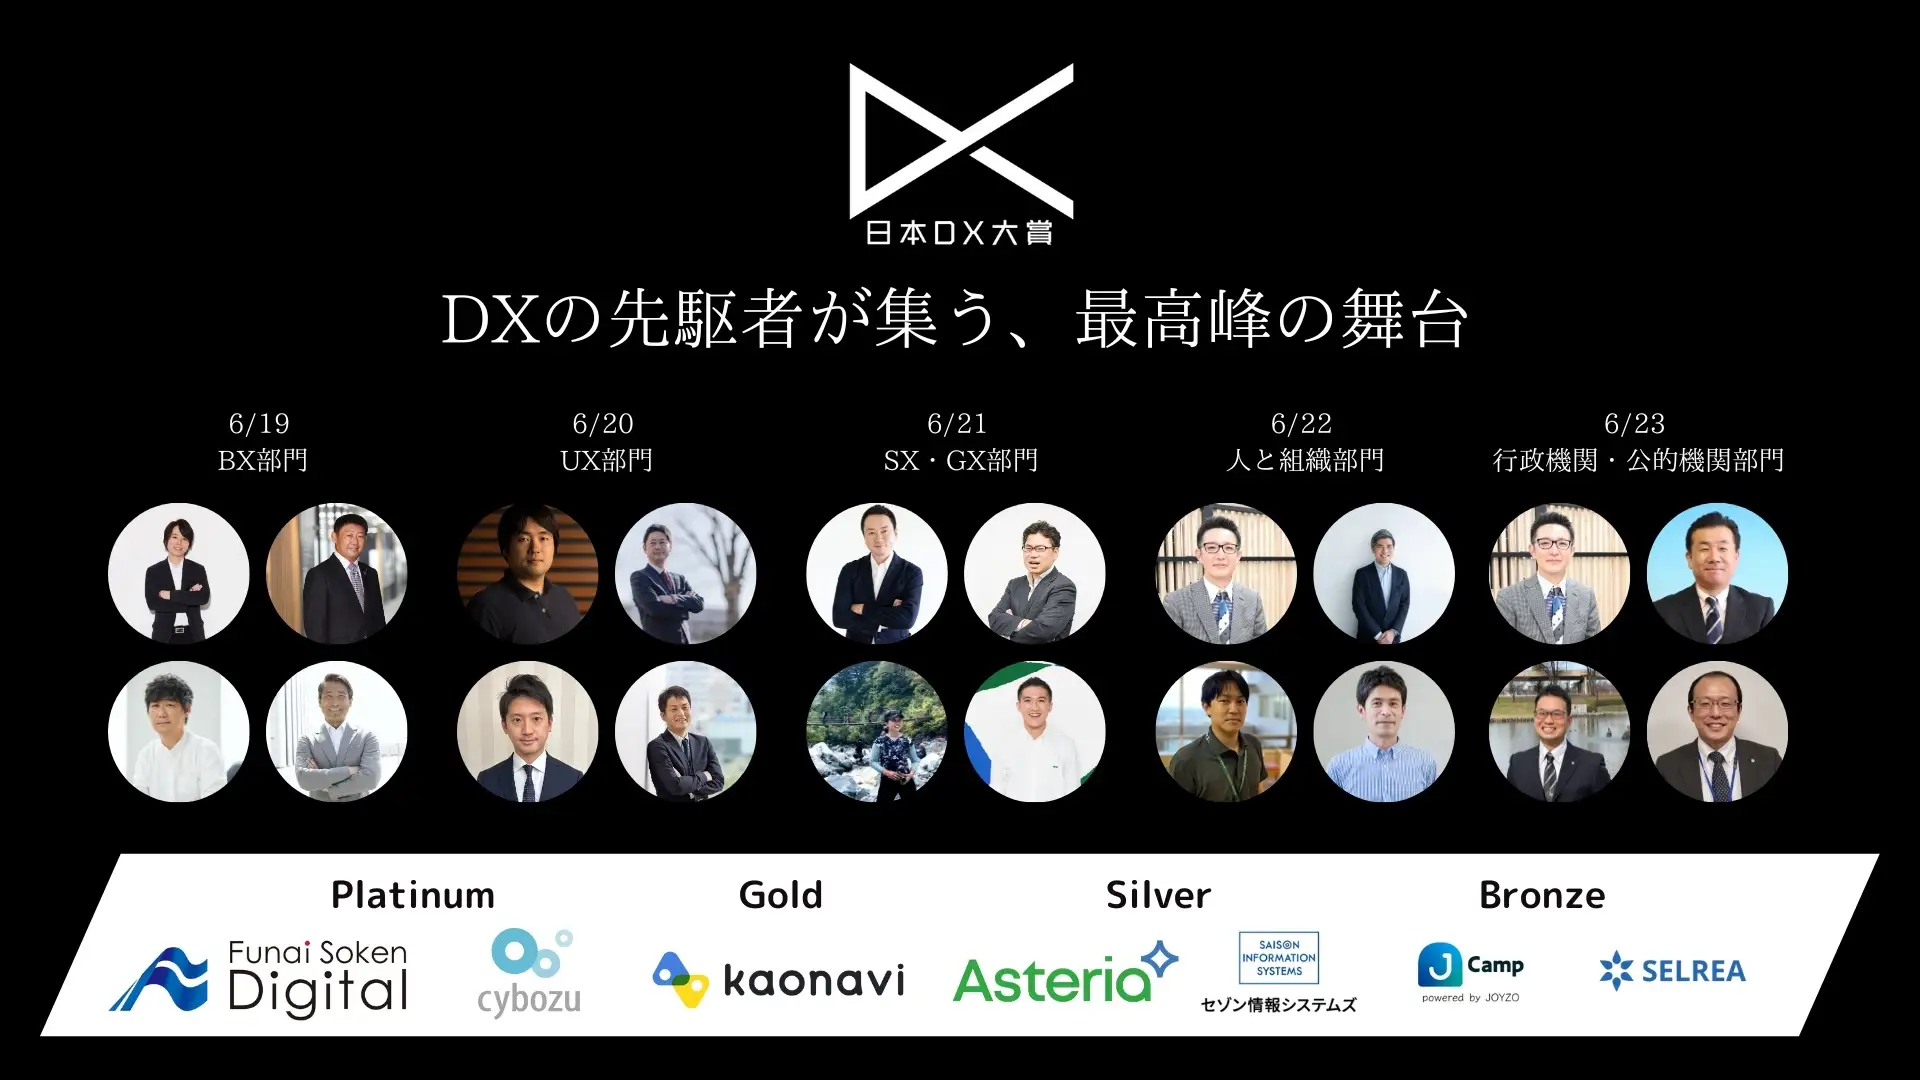 DXコンテスト「日本DX大賞」 応募総数110事例から選ばれたファイナリストを発表！[ニュース]